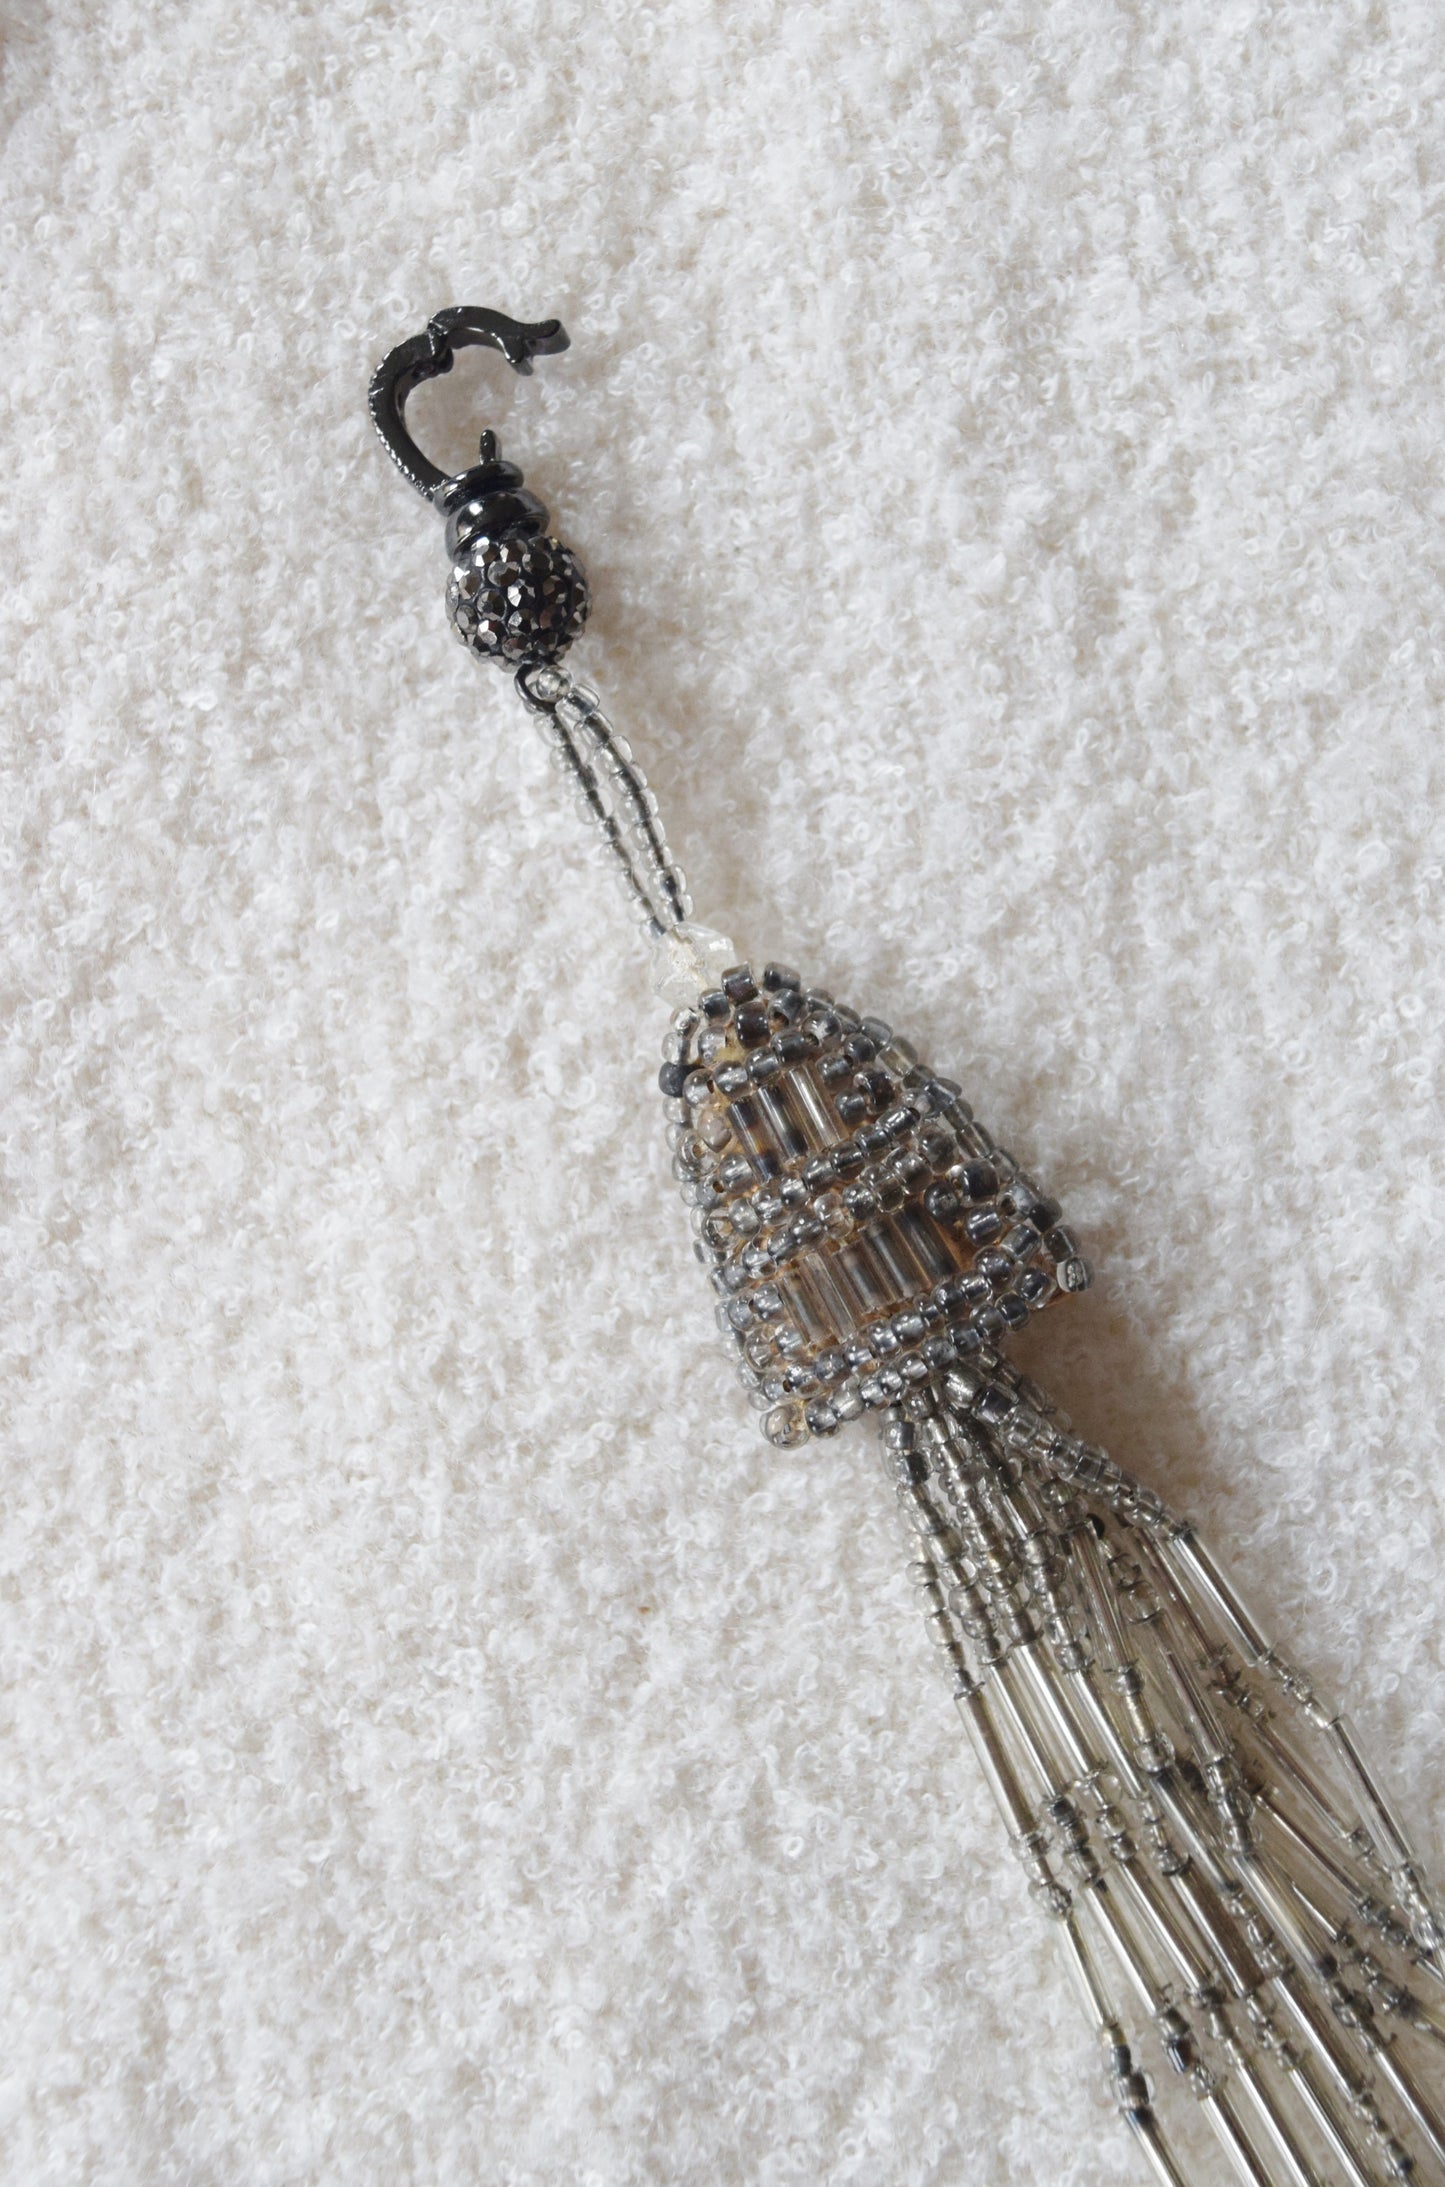 Antique Tassel Necklace